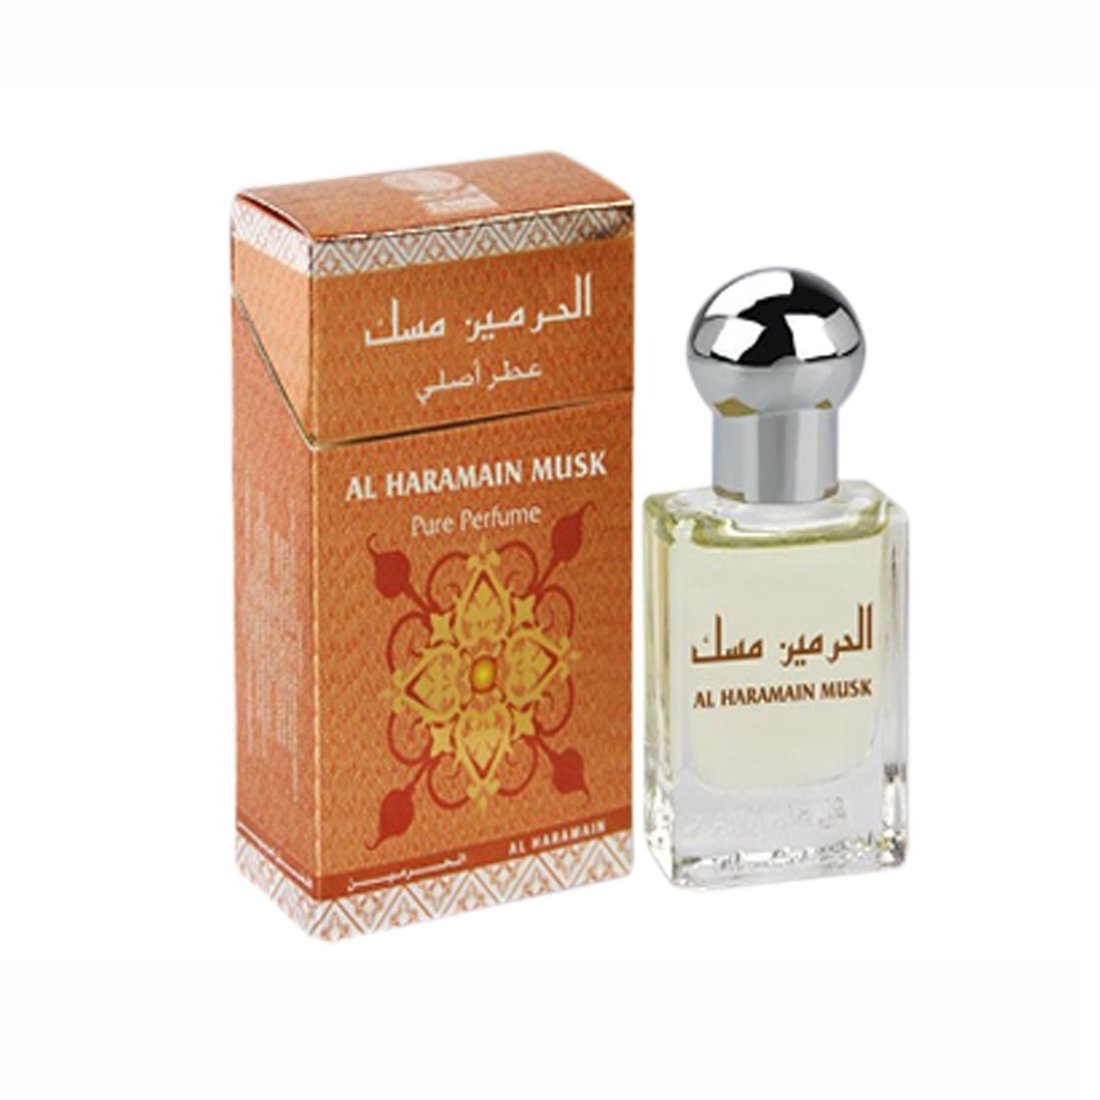 Al Haramain Musk Fragrance Pure Original Roll on Perfume Oil (Attar) - 15 ml